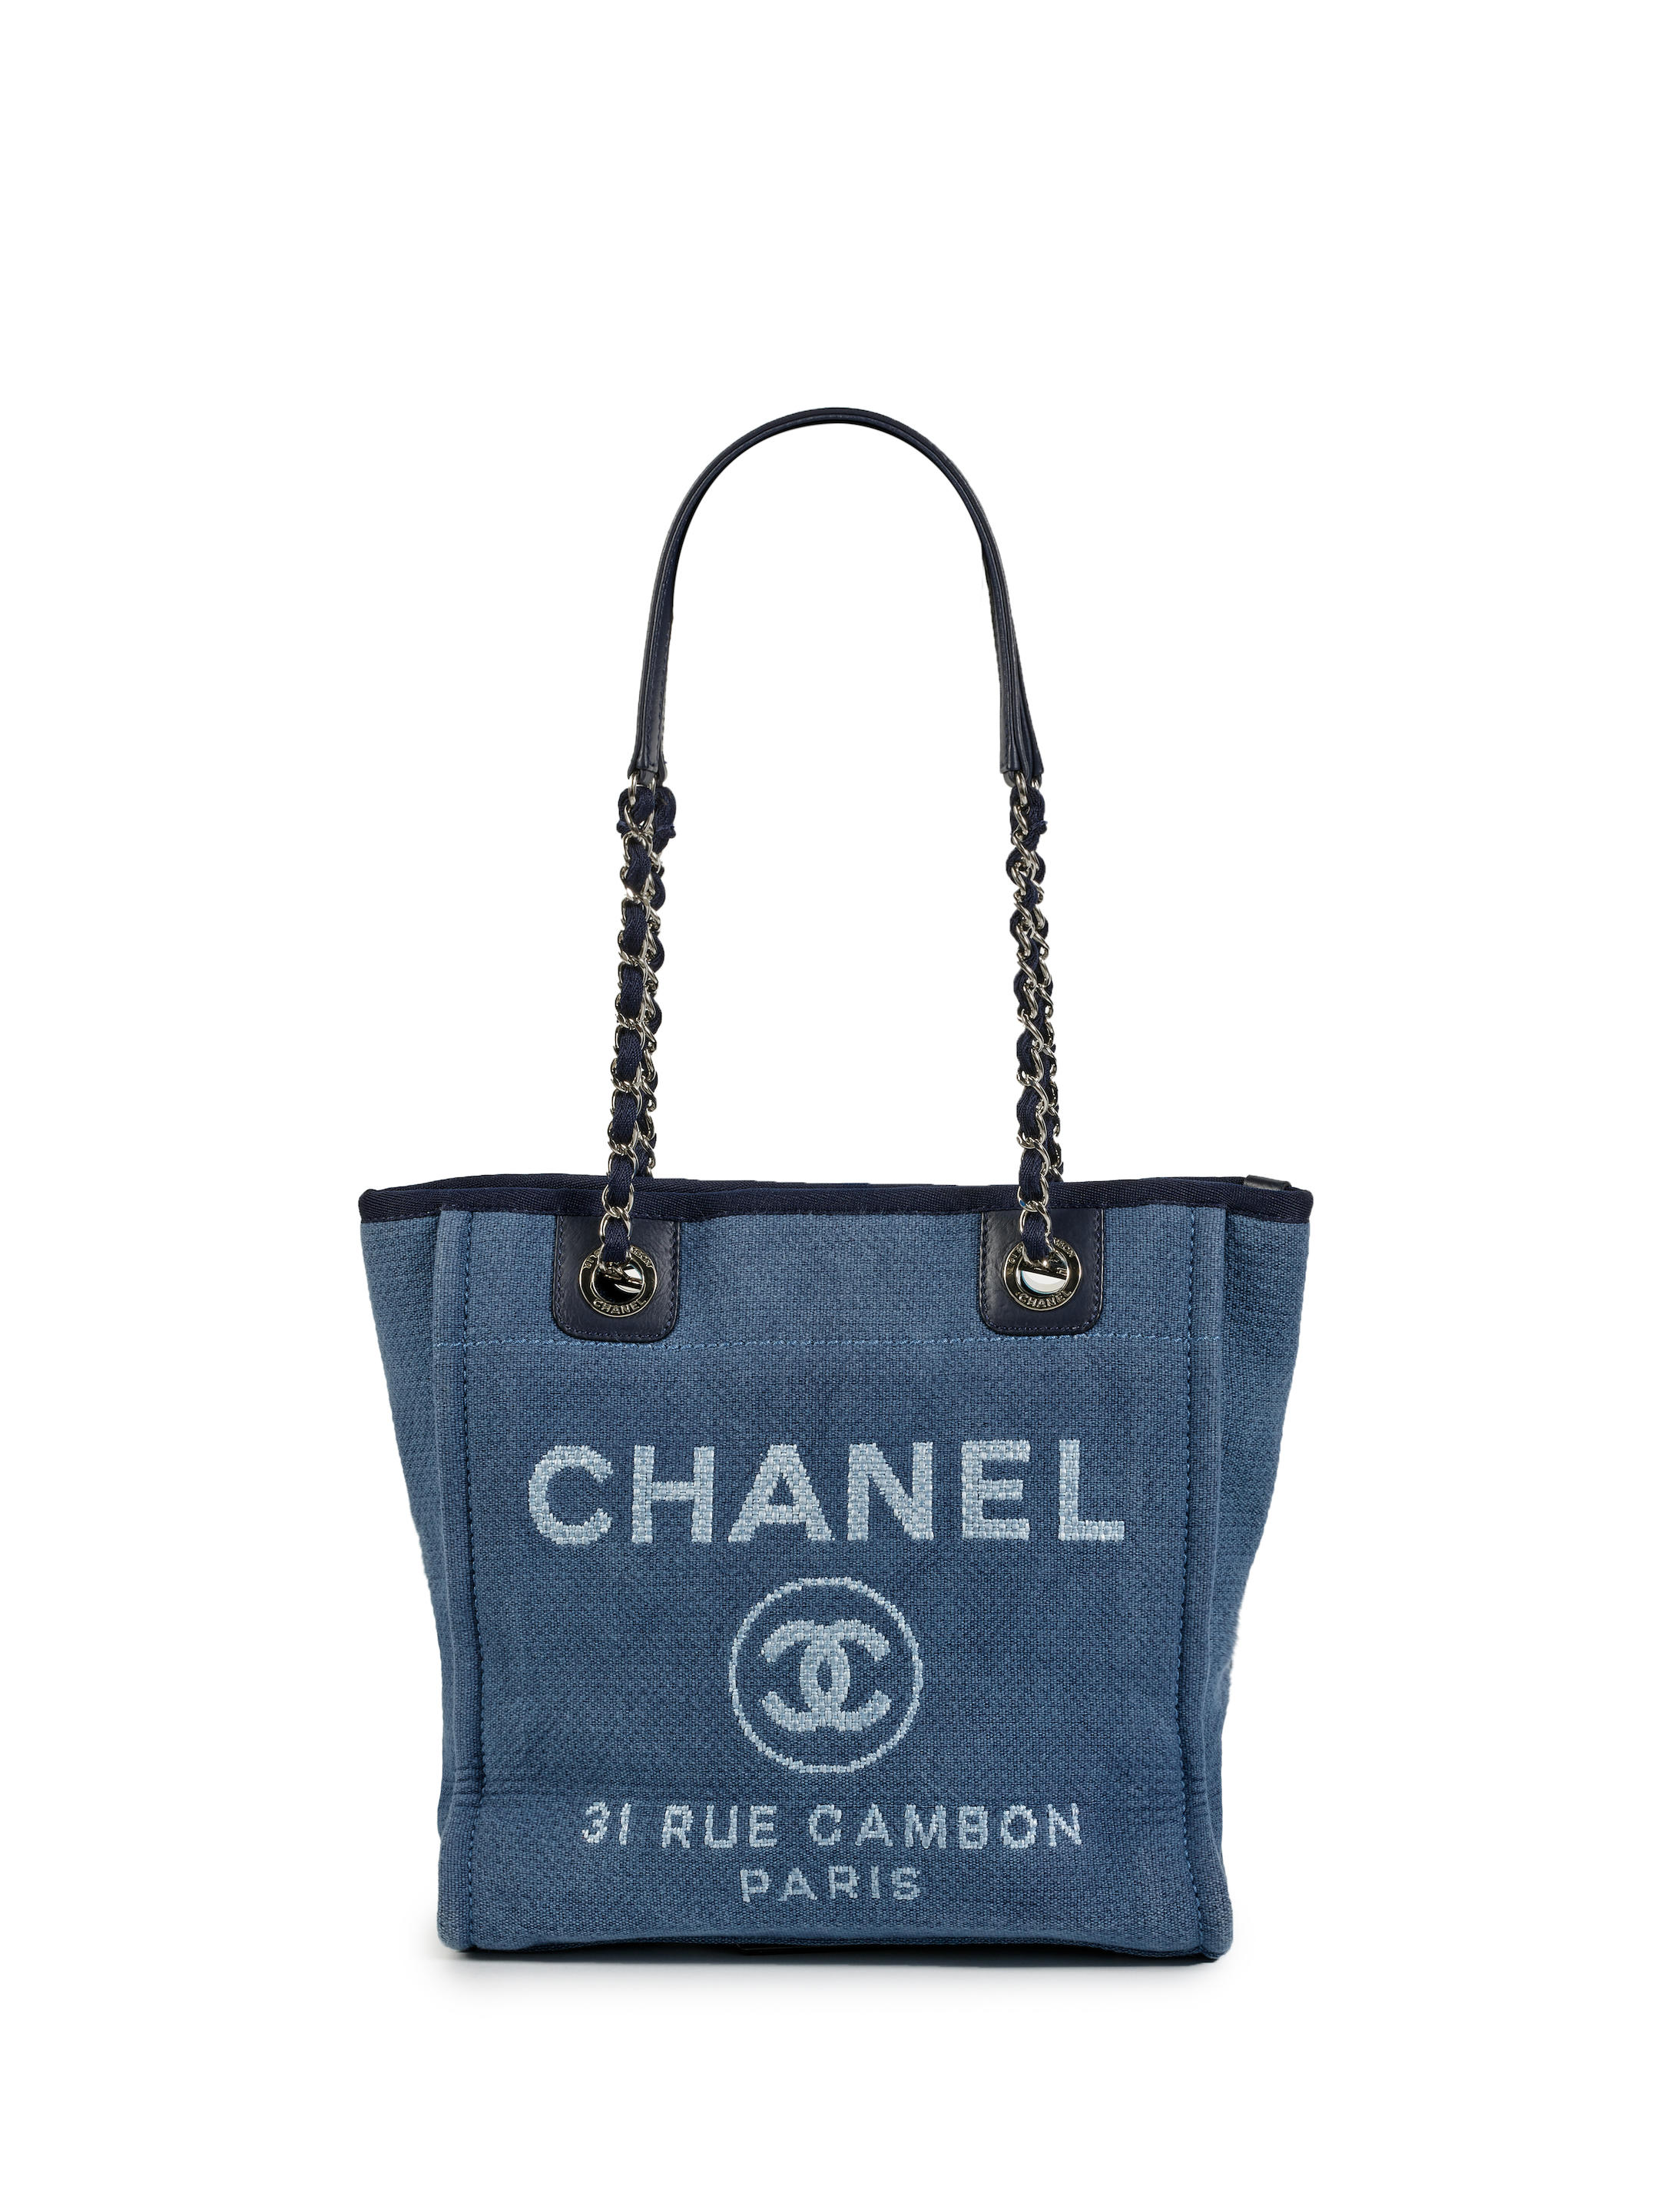 chanel deauville beach bag